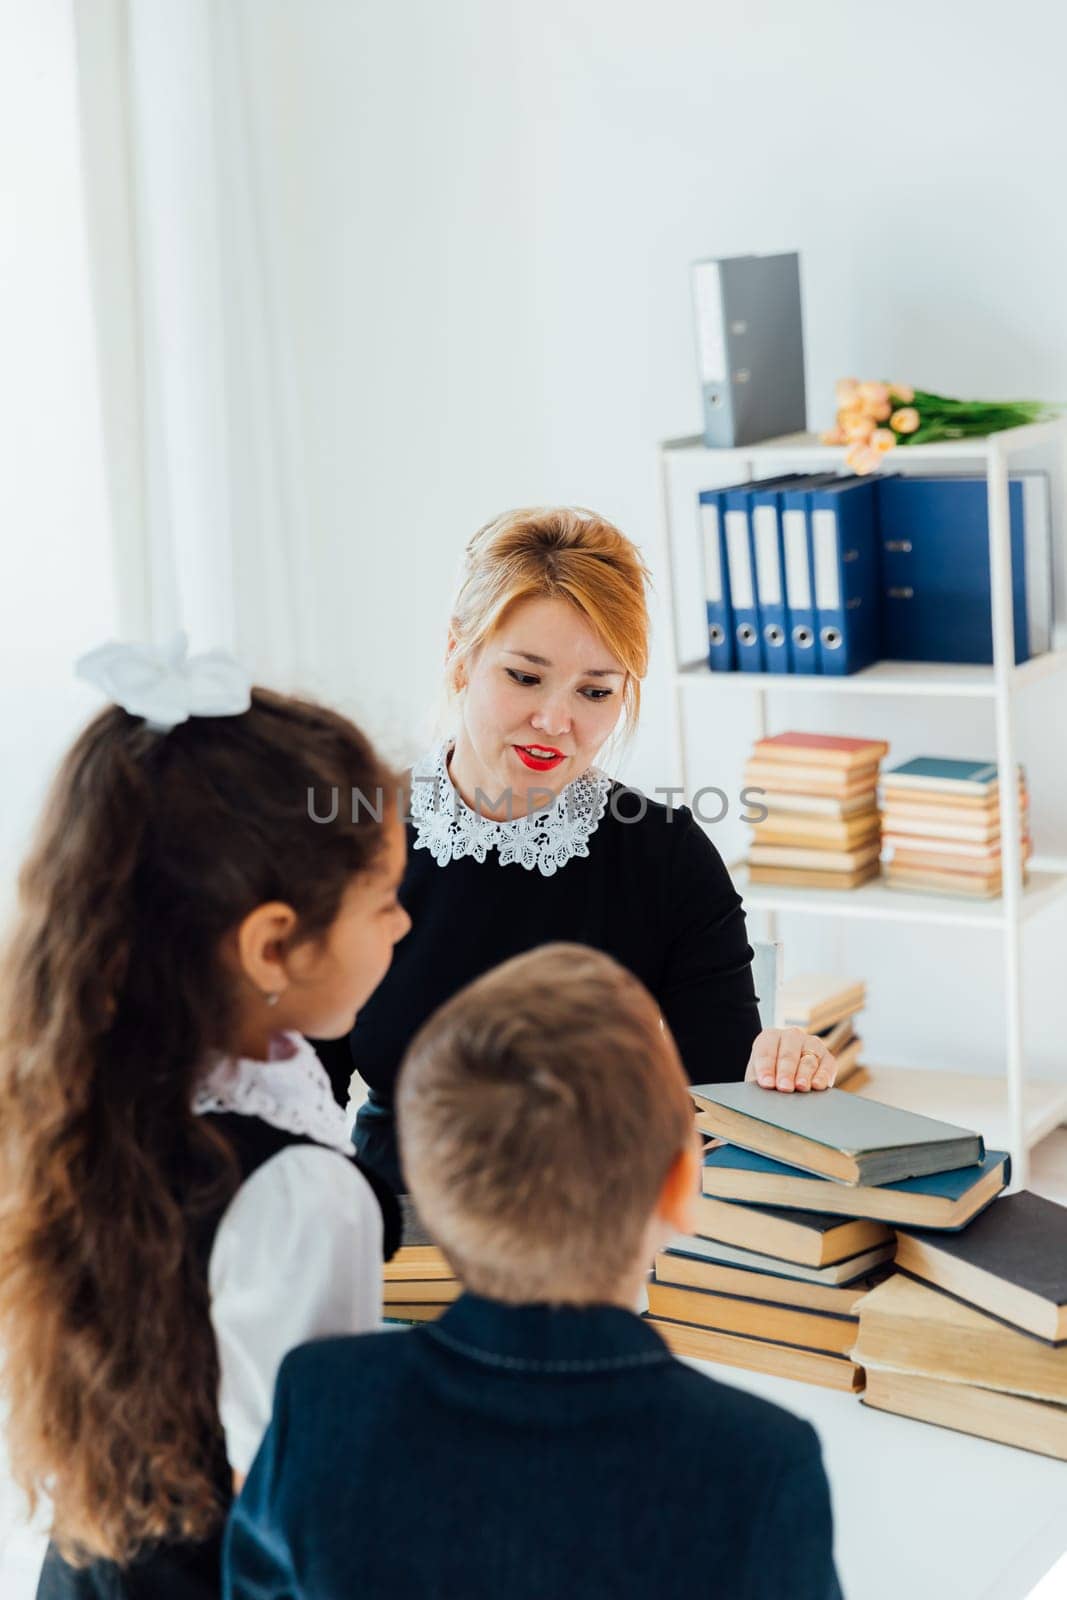 Teacher teaching children in school classroom by Simakov